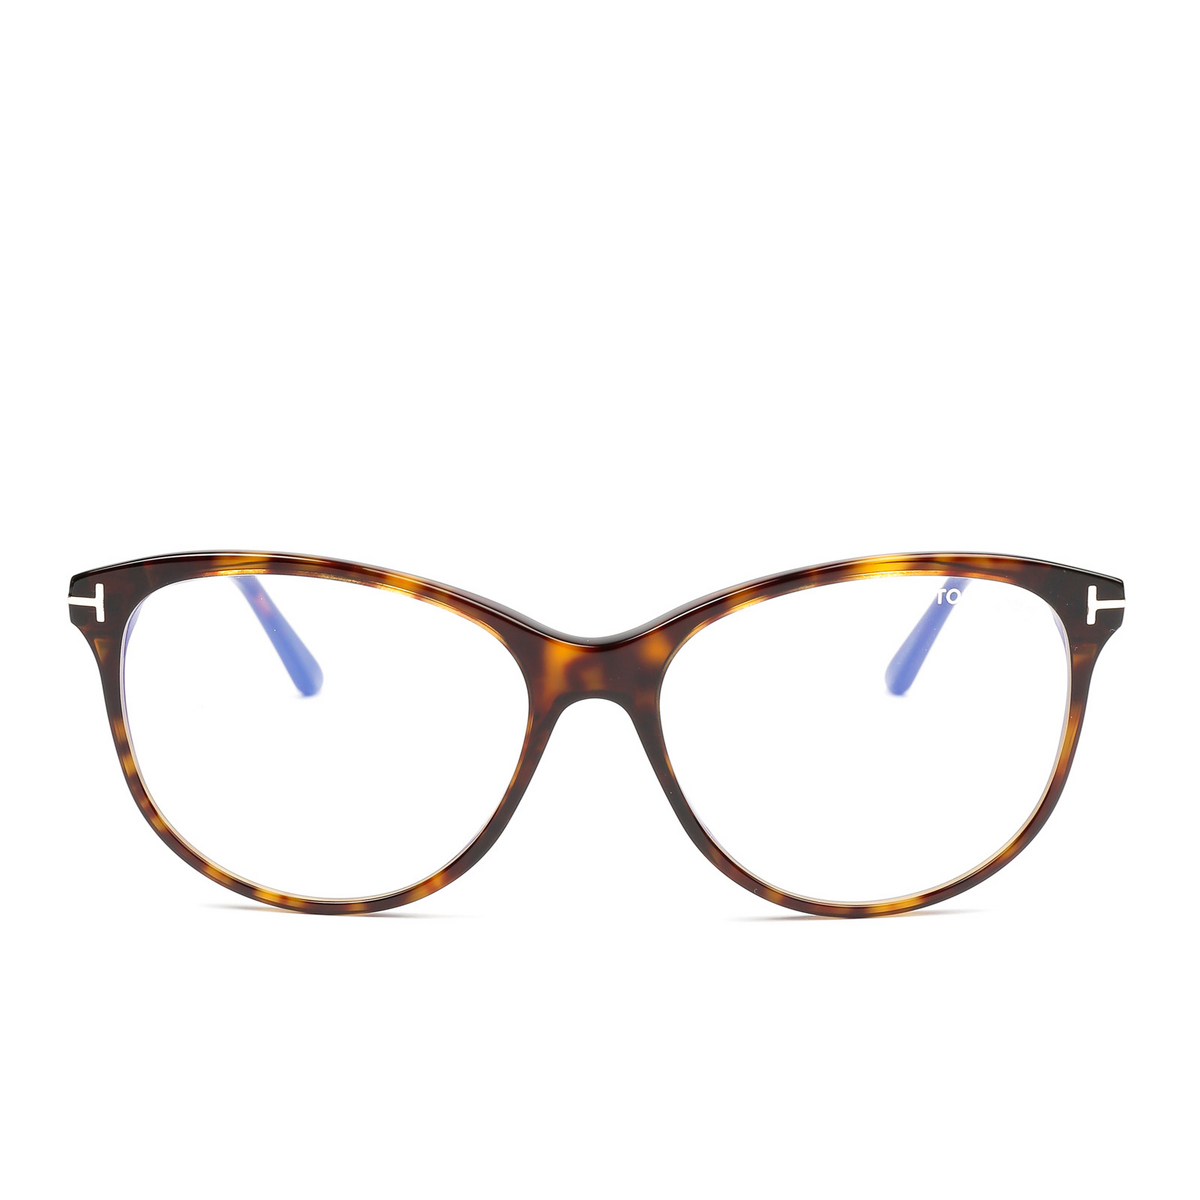 Tom Ford® Cat-eye Eyeglasses: FT5544-B color 052 - front view.